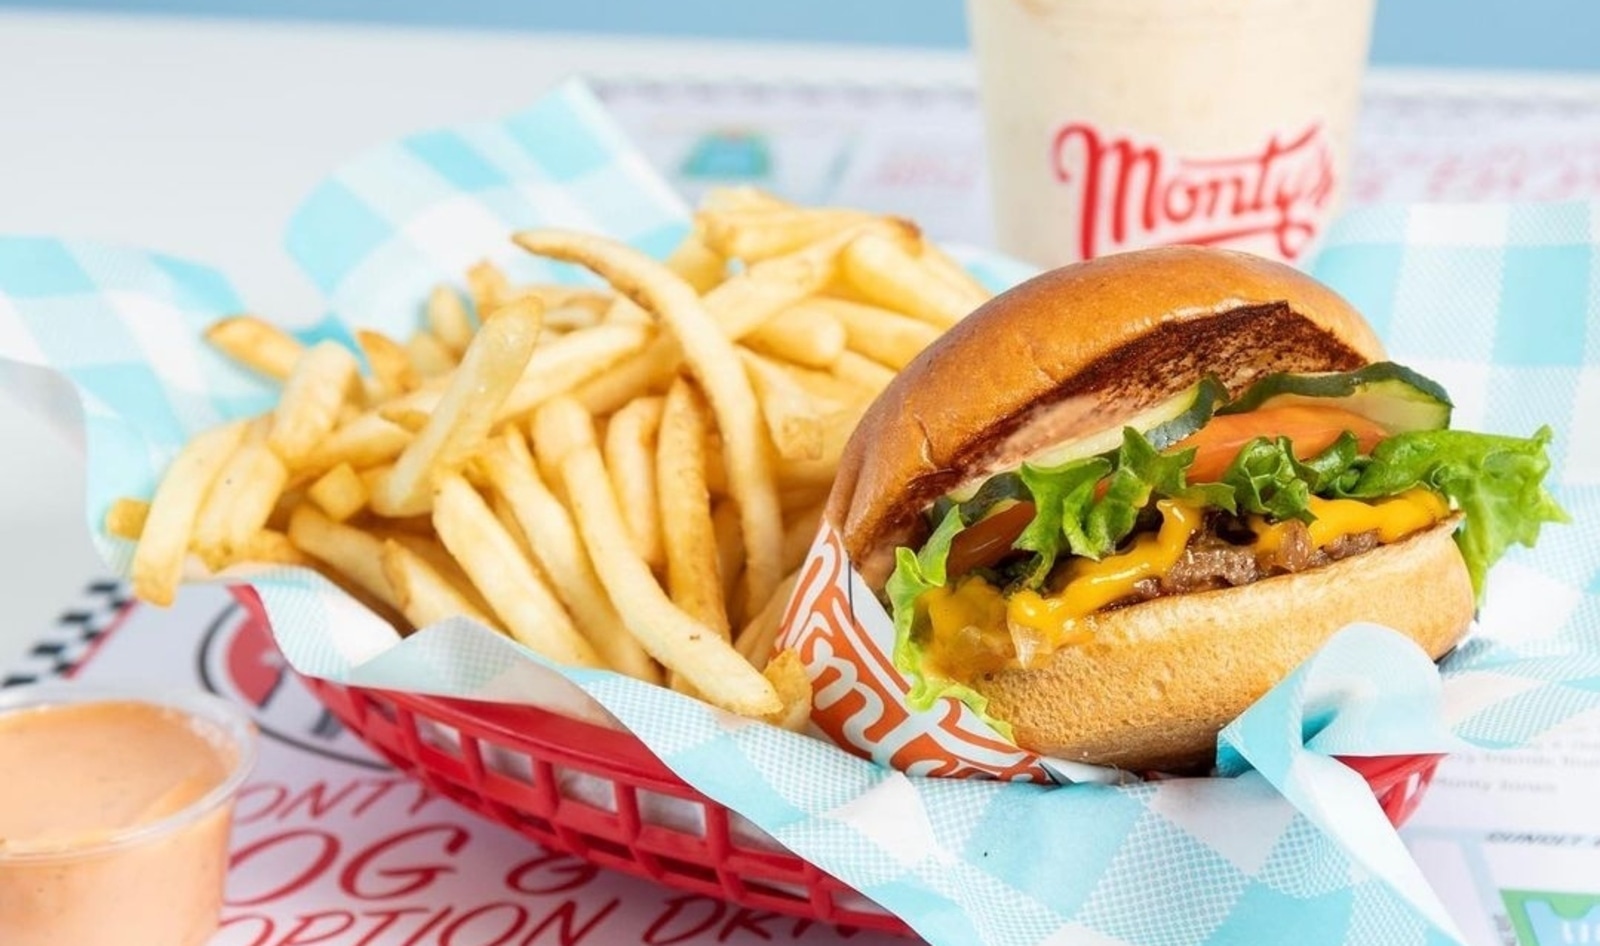 15 Juicy Vegan Burgers That Are Way Better Than the Big Mac